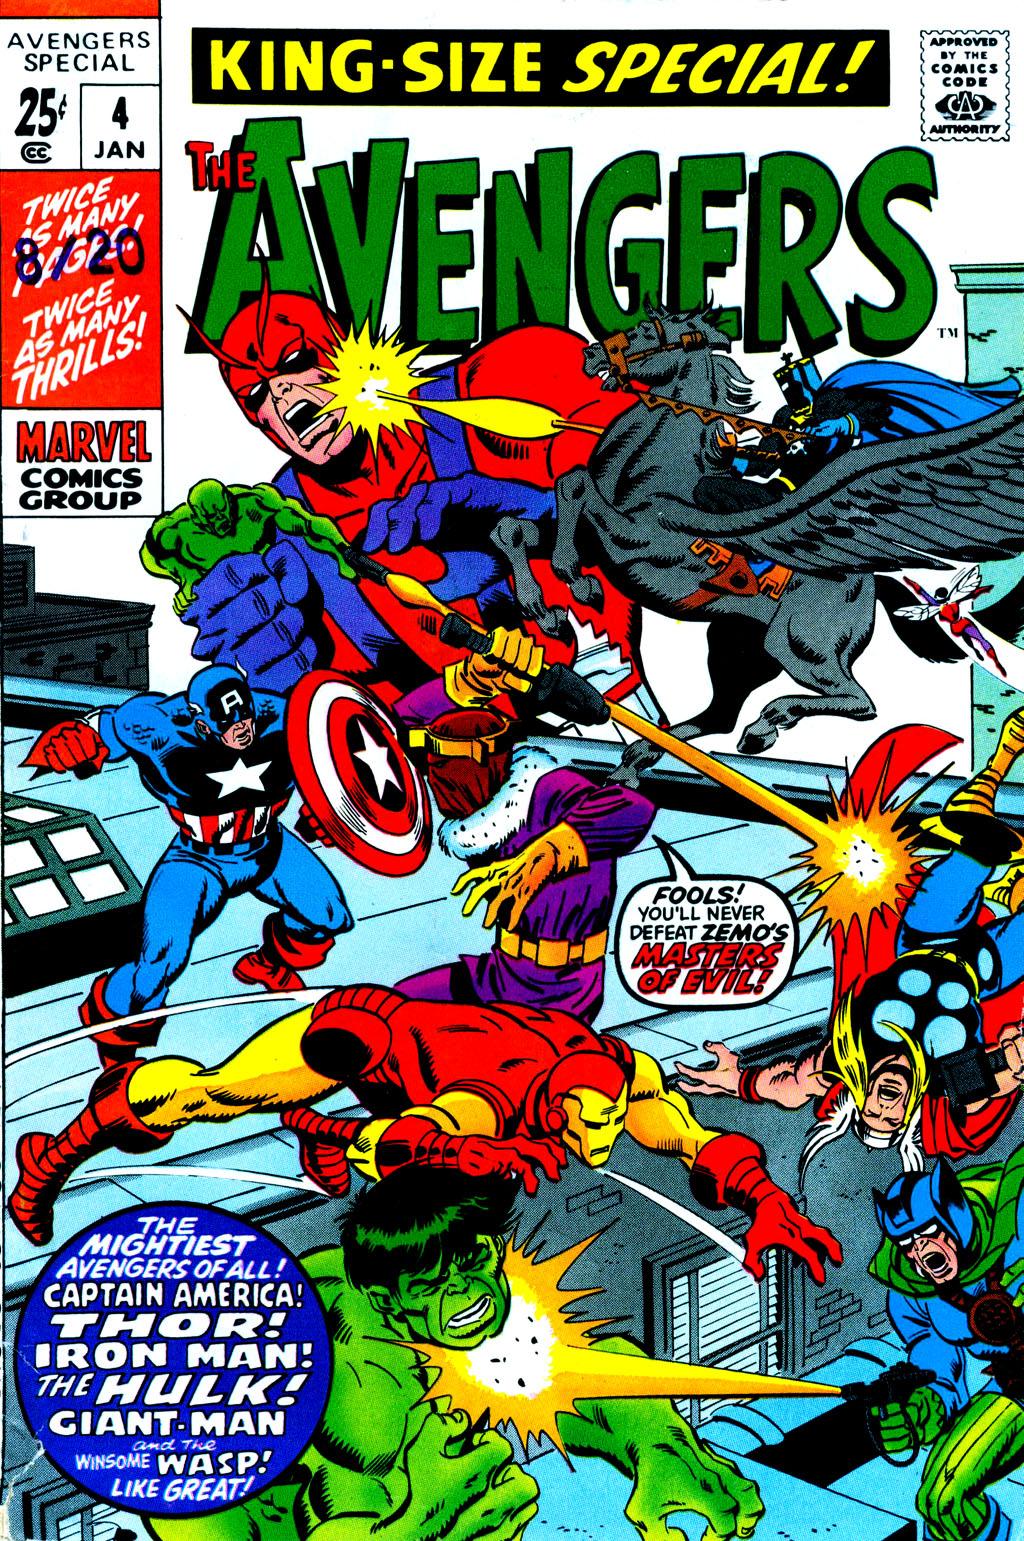 The Avengers Vol. 1 #4